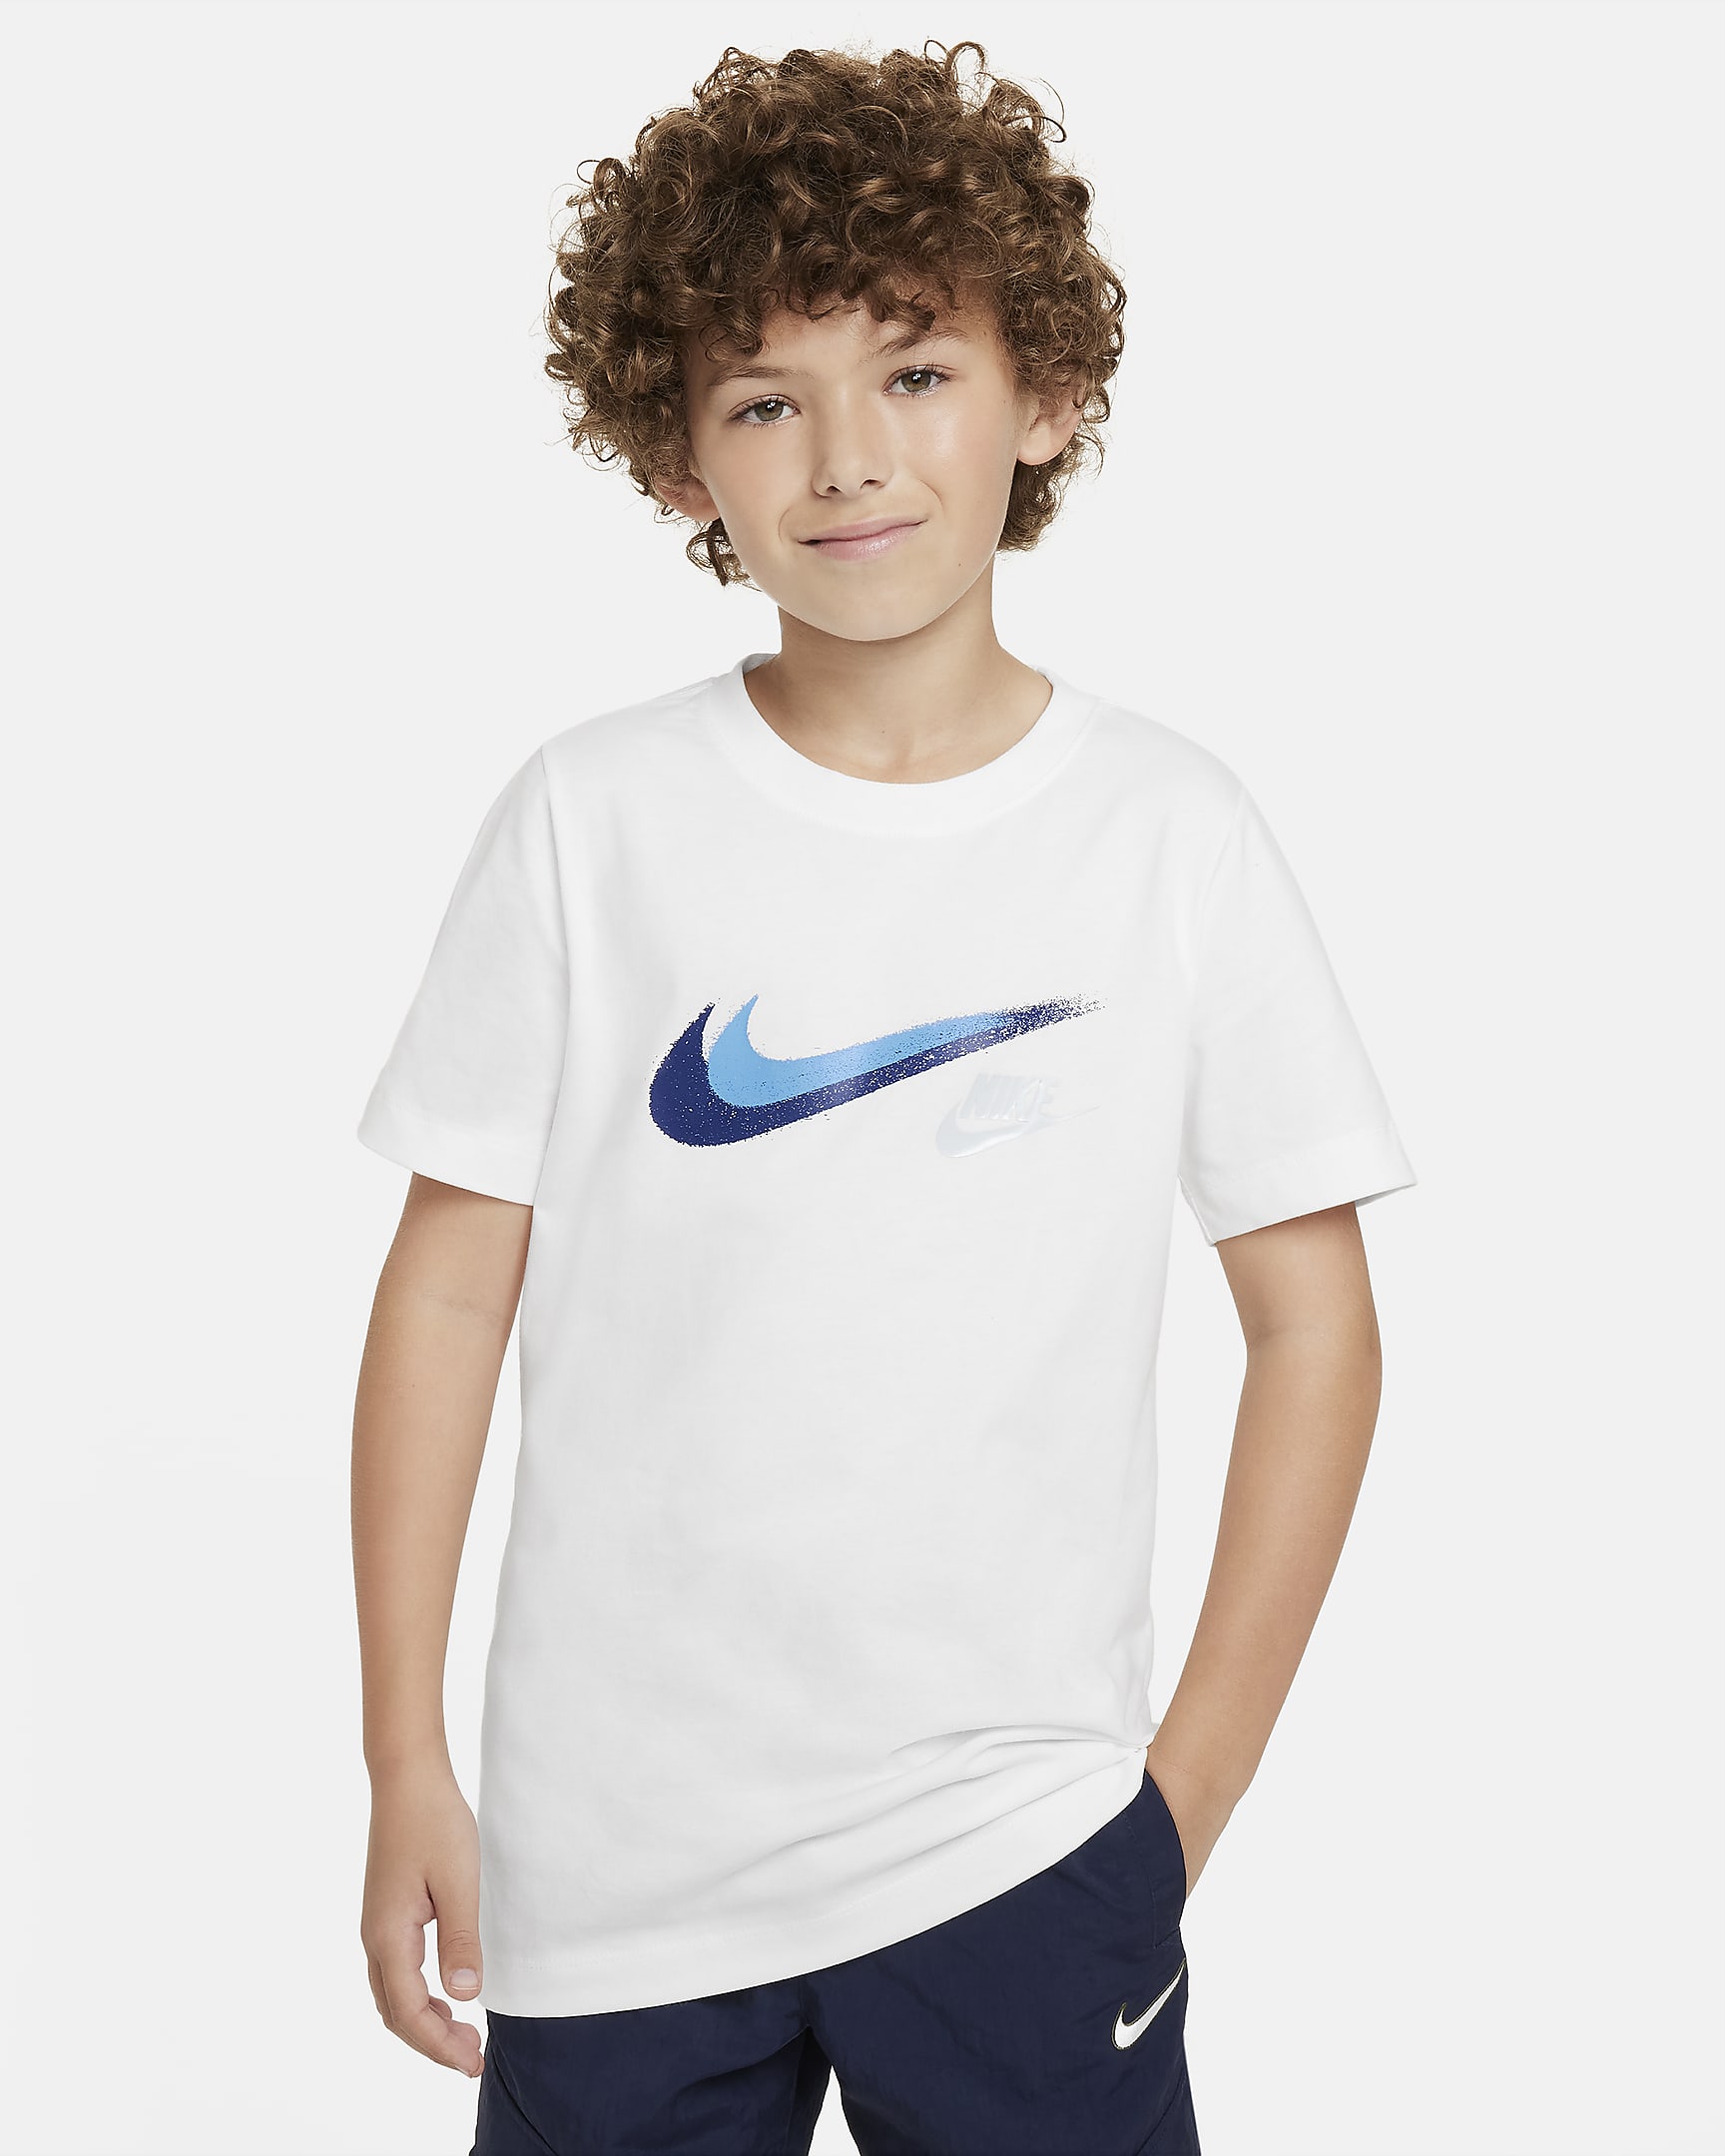 Nike Sportswear Older Kids' (Boys') Graphic T-Shirt - White